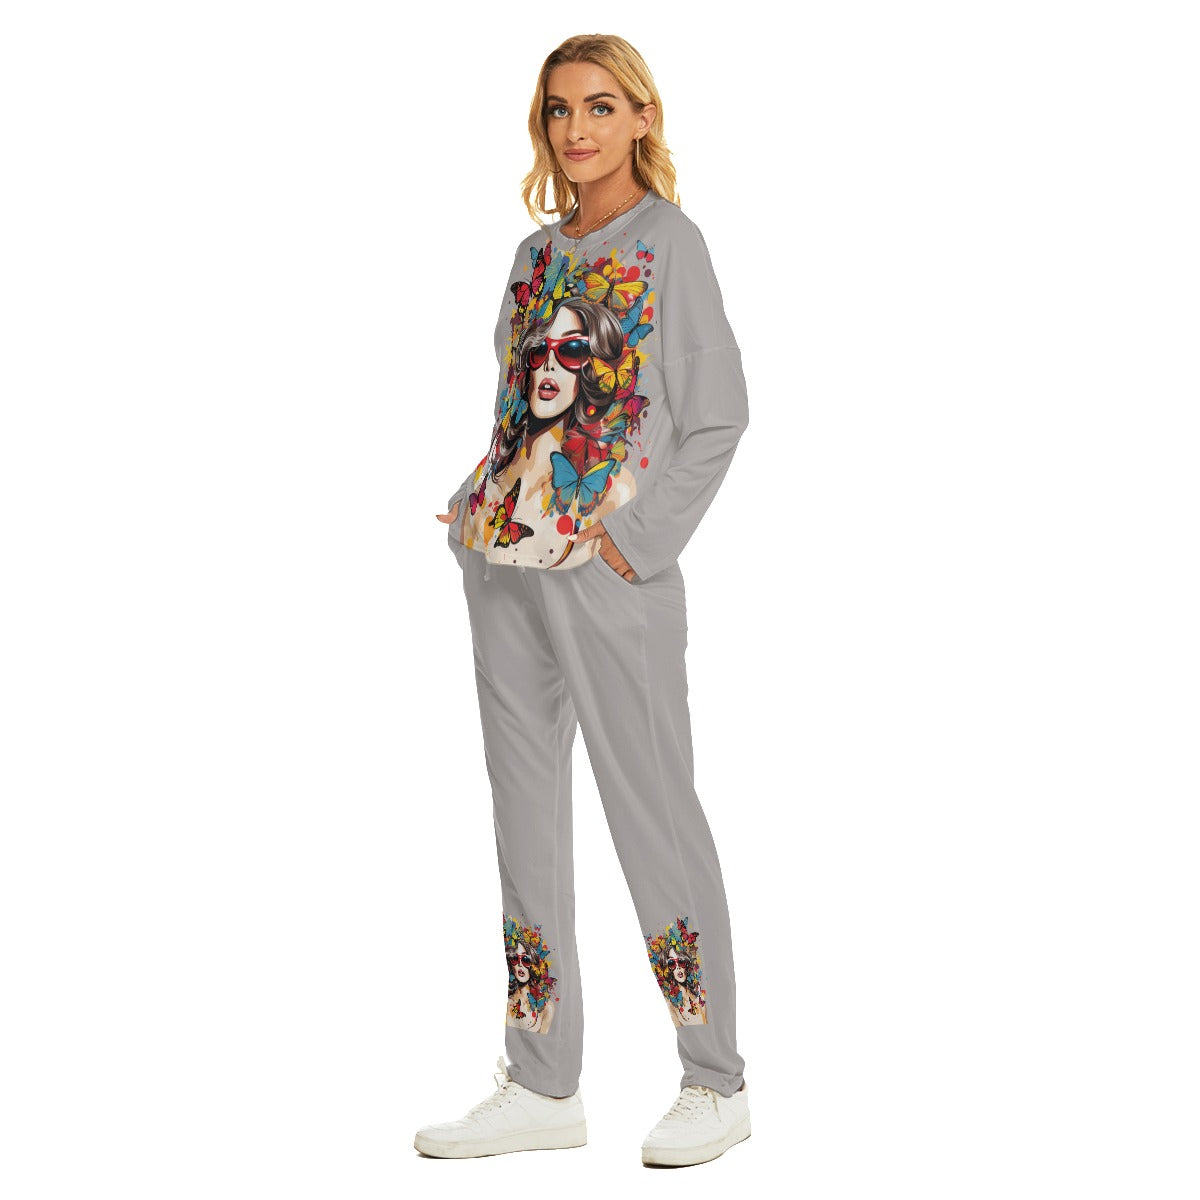 All-Over Print Women's Pajama Suit